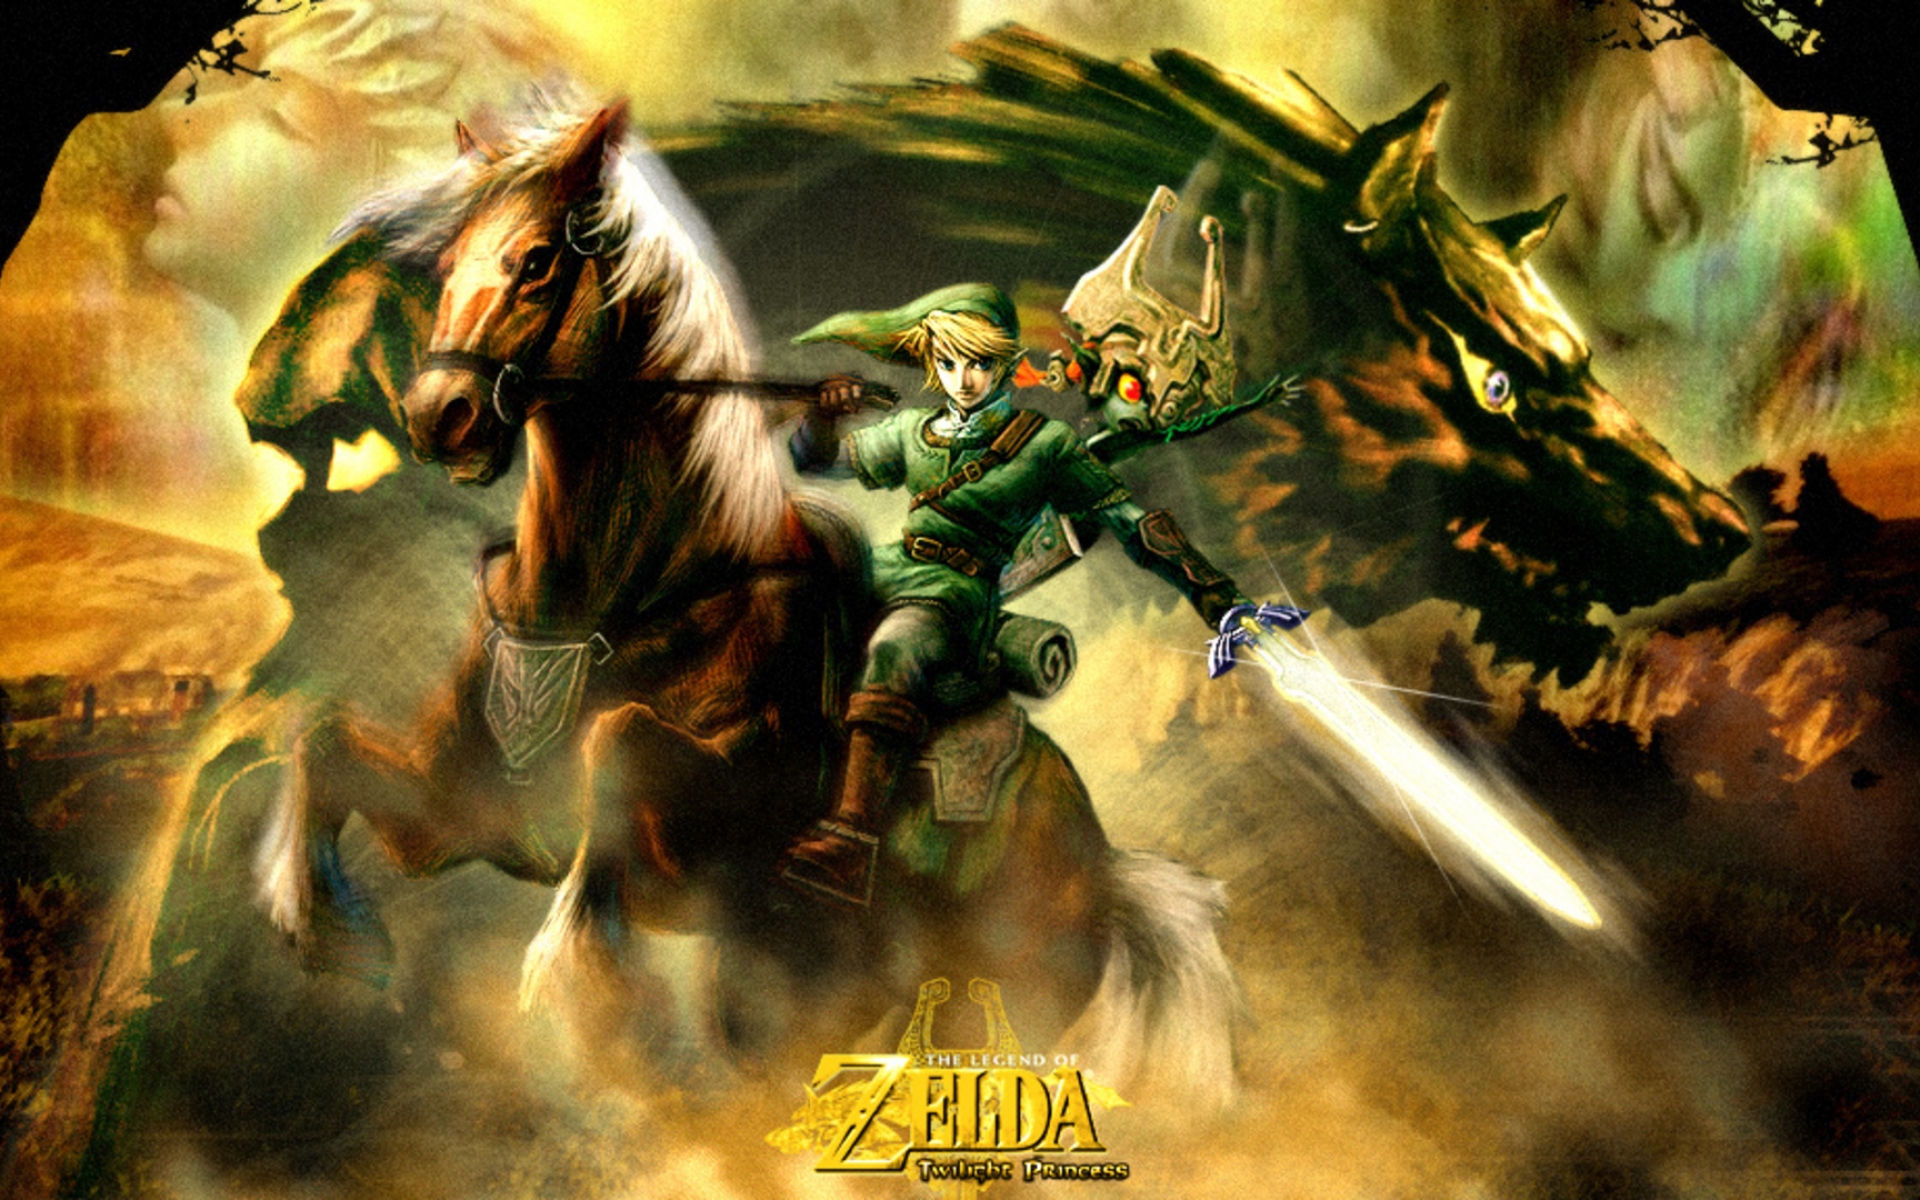 the legend of zelda wallpaper,action adventure game,strategy video game,games,cg artwork,mythology